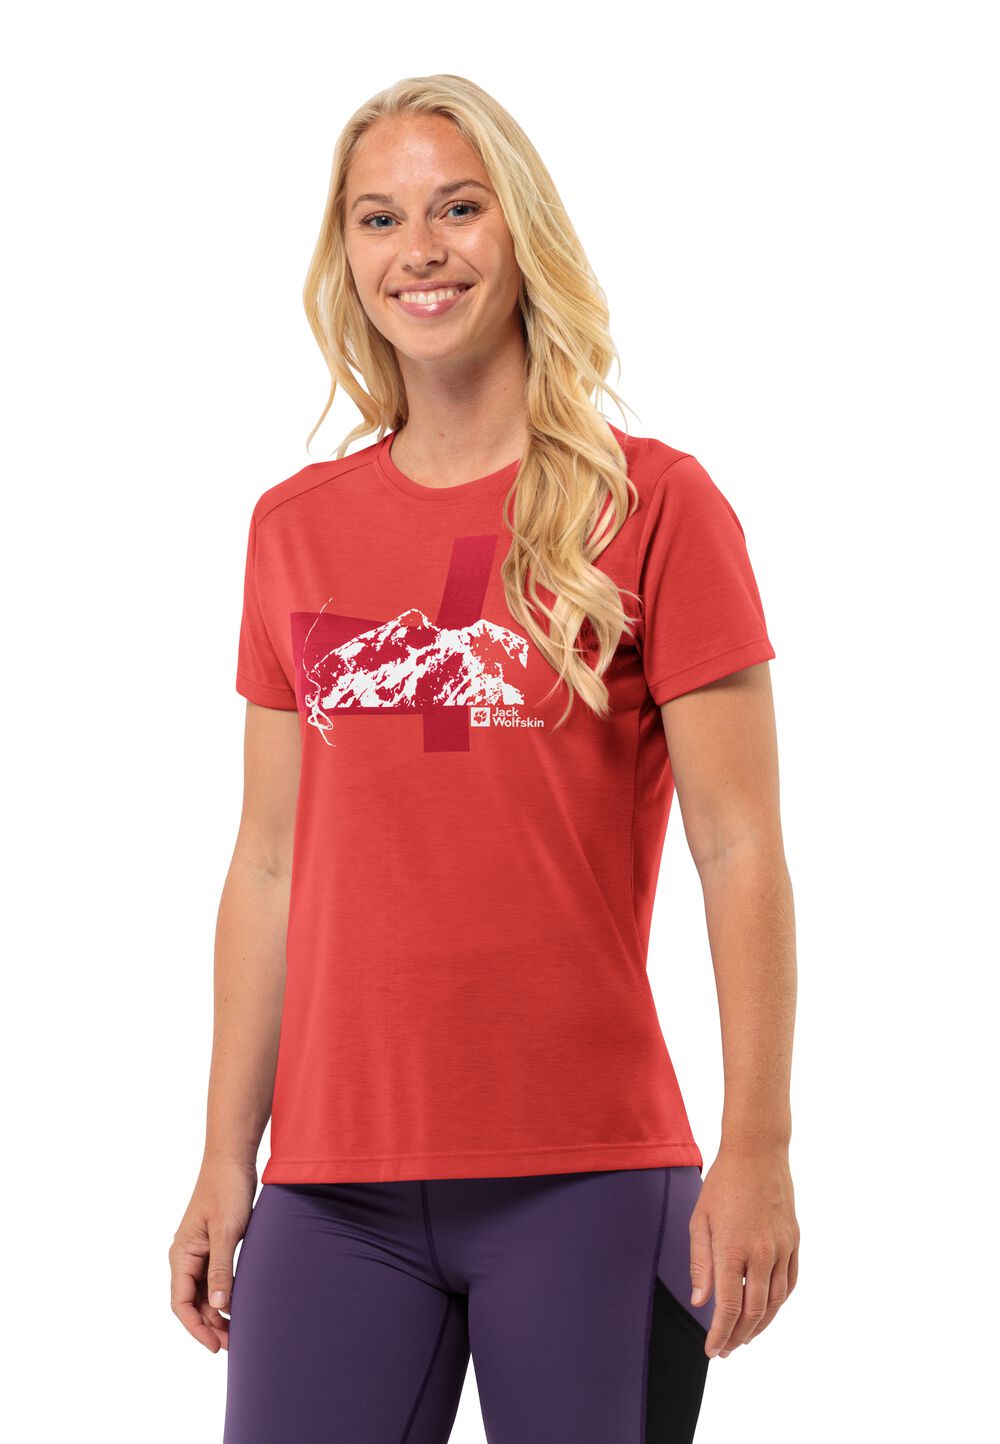 Jack Wolfskin Vonnan S S Graphic T-Shirt Women Functioneel shirt Dames XS rood vibrant red